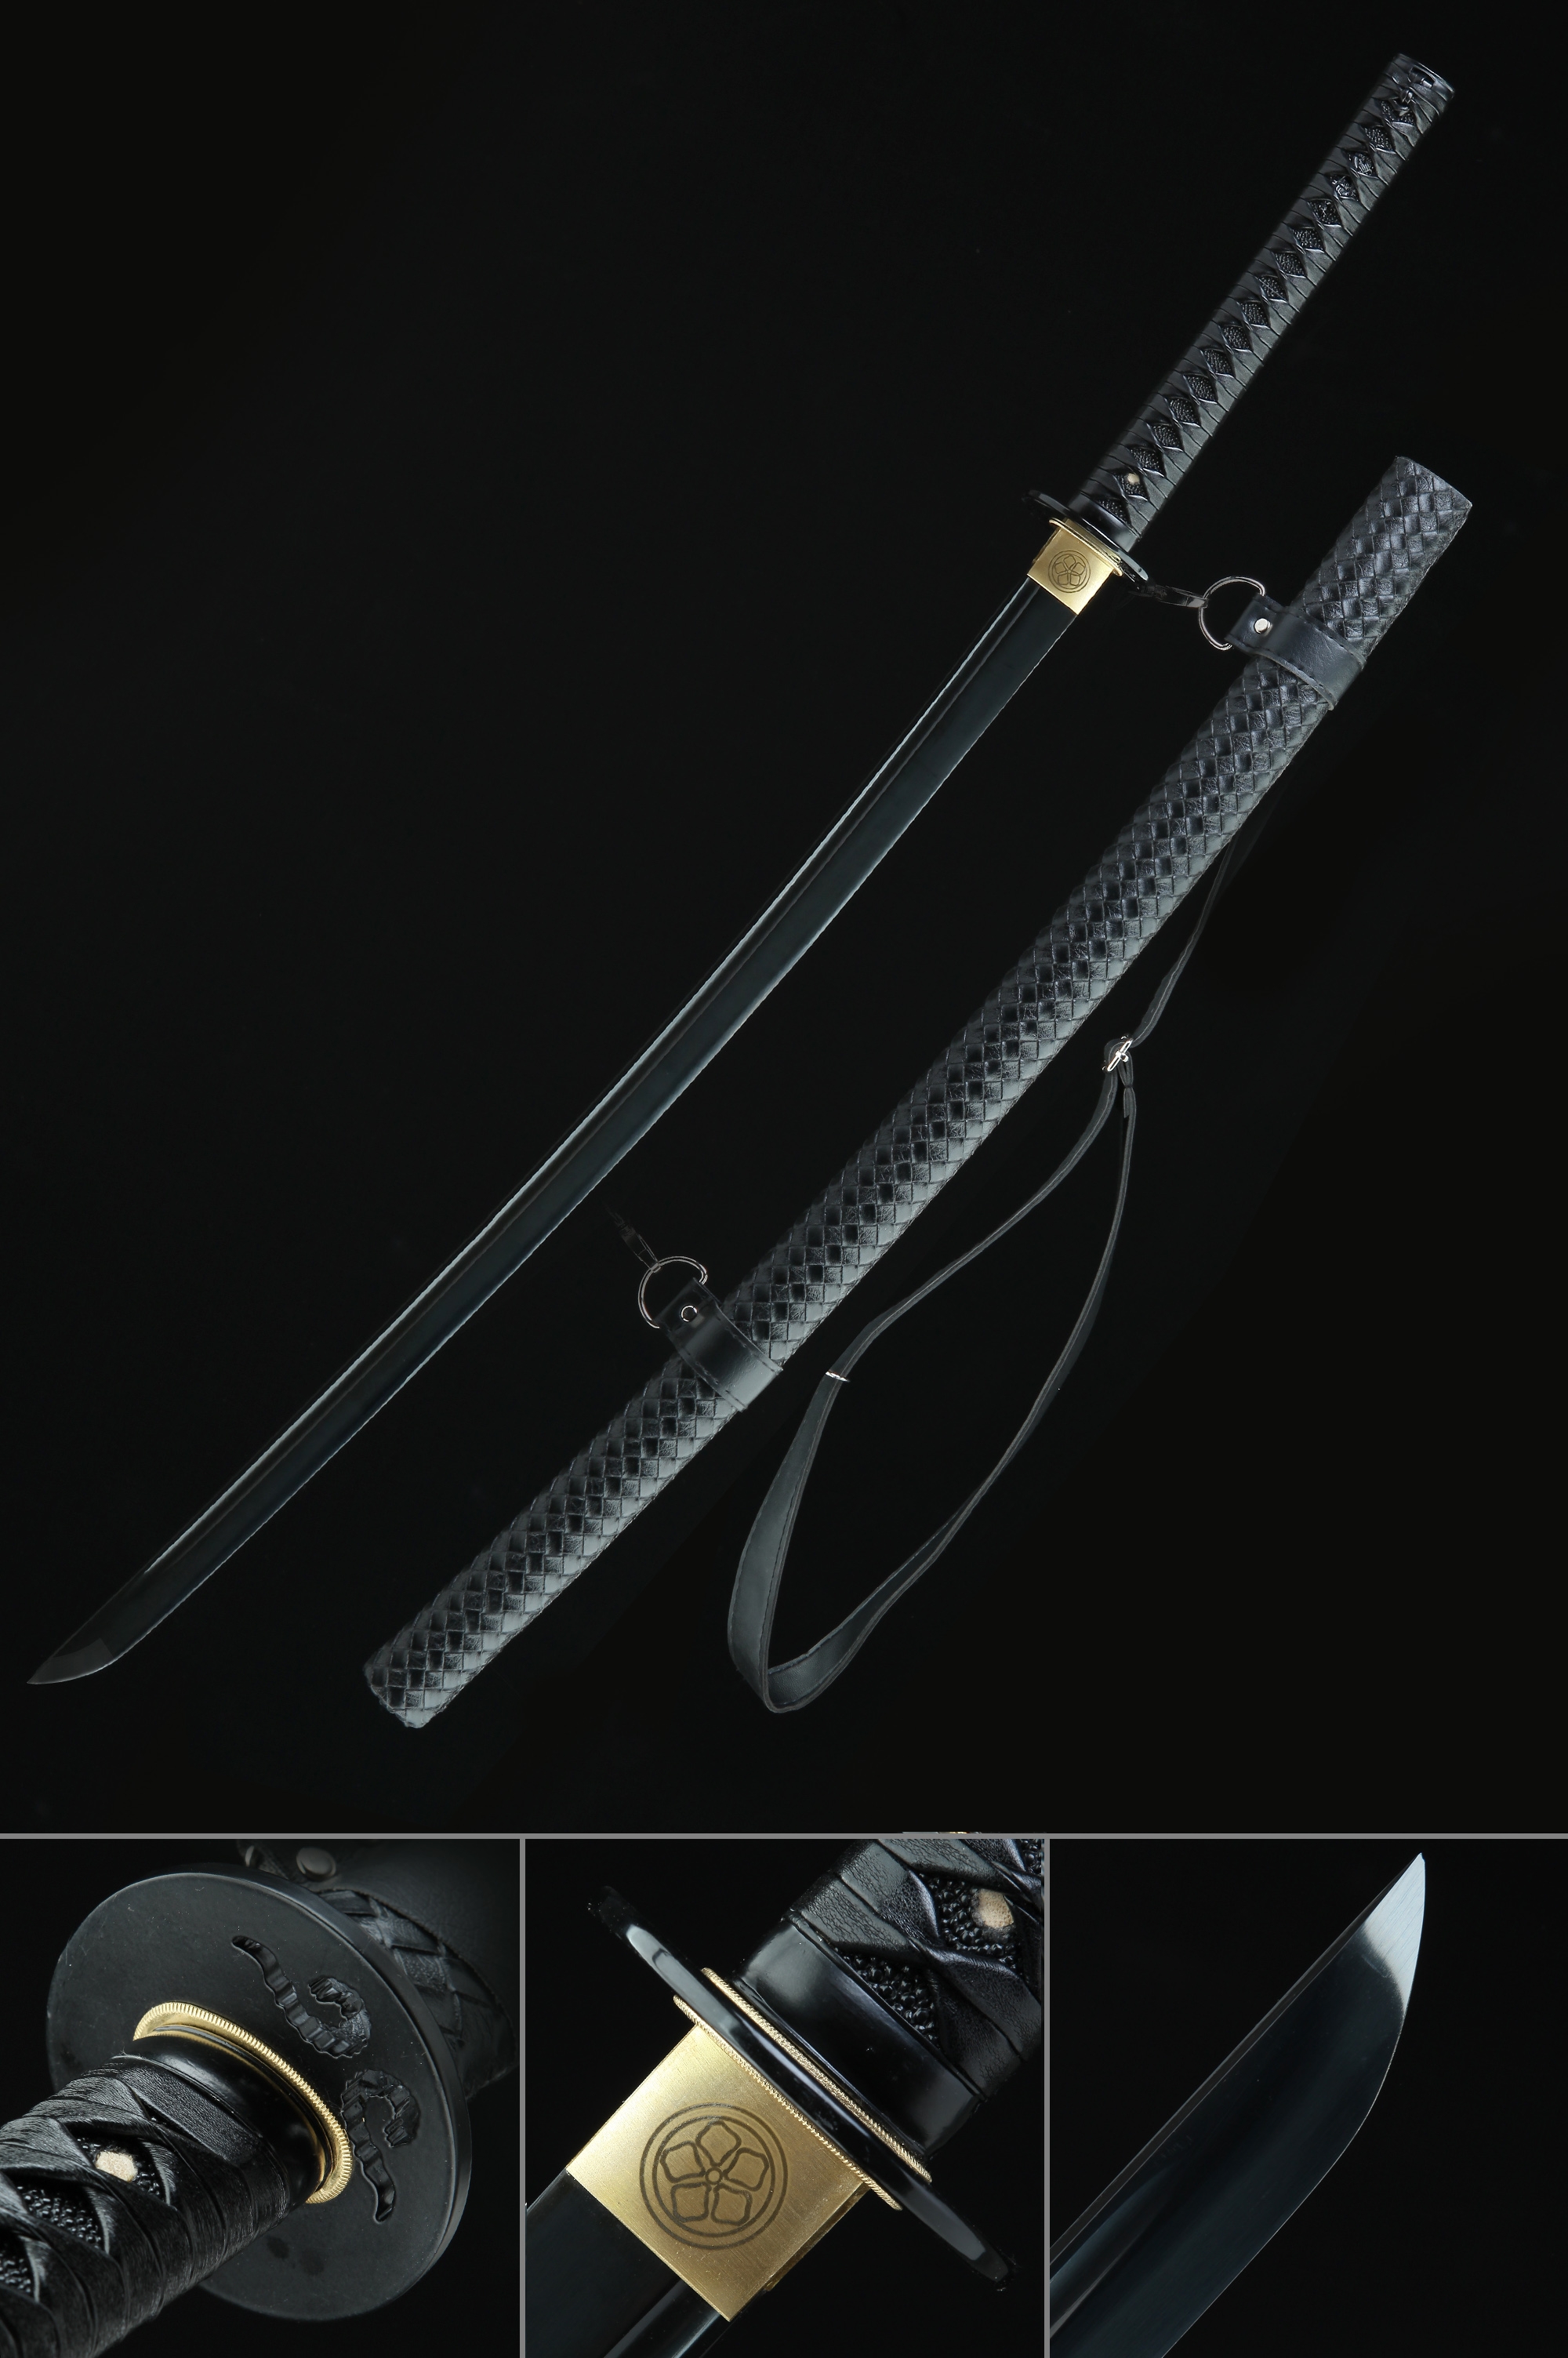 Black Blade Katana, Handmade Japanese Katana Sword 1060 Carbon Steel With Black Blade And Strap